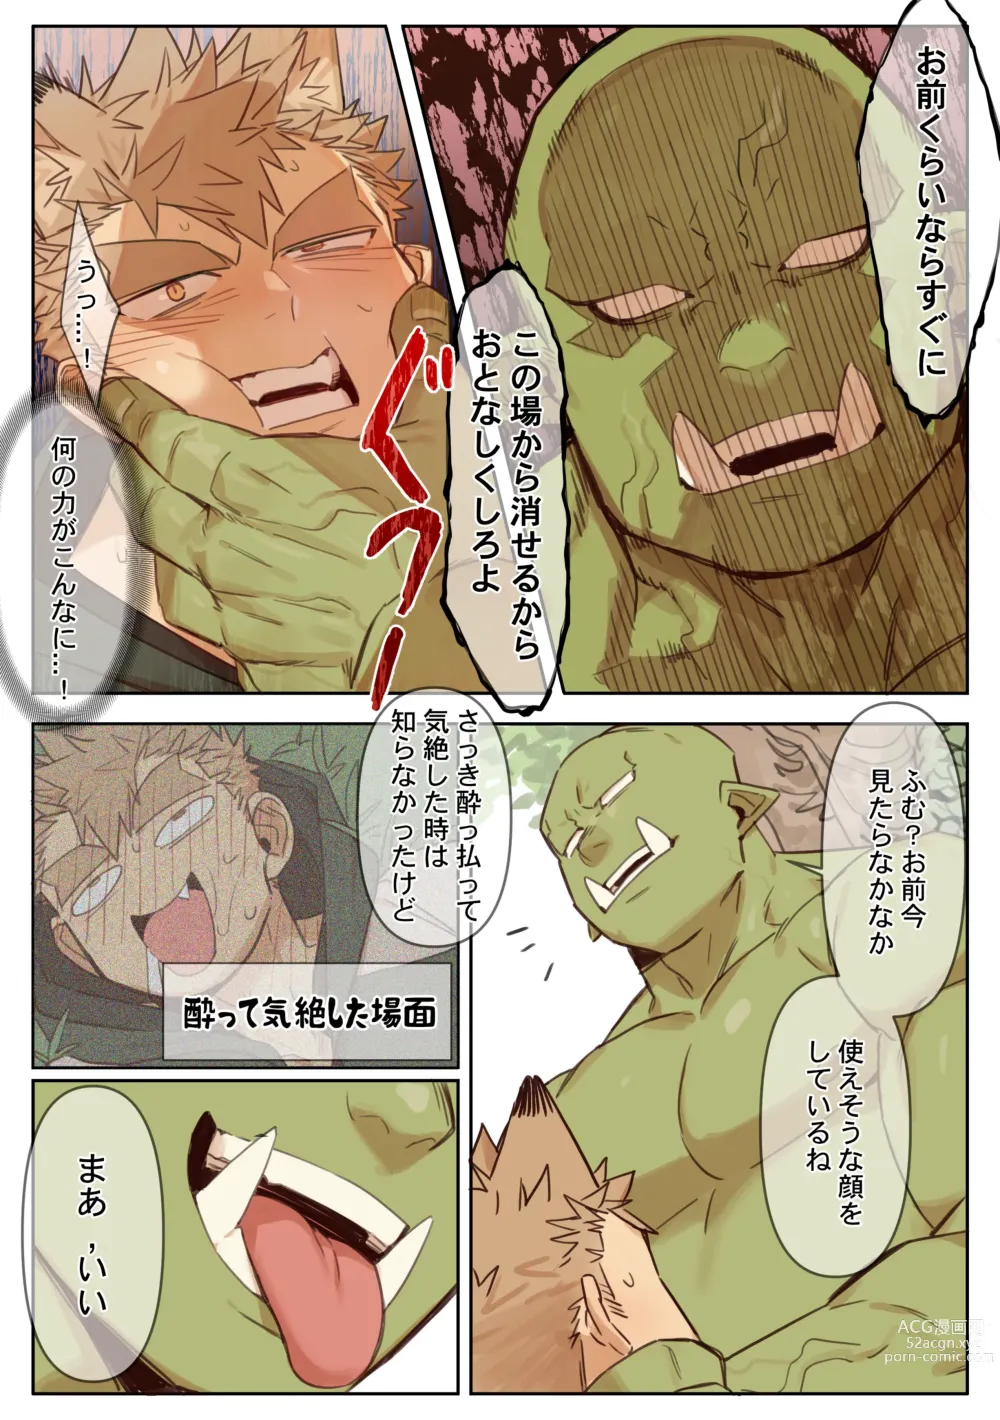 Page 6 of doujinshi 41 Orcs